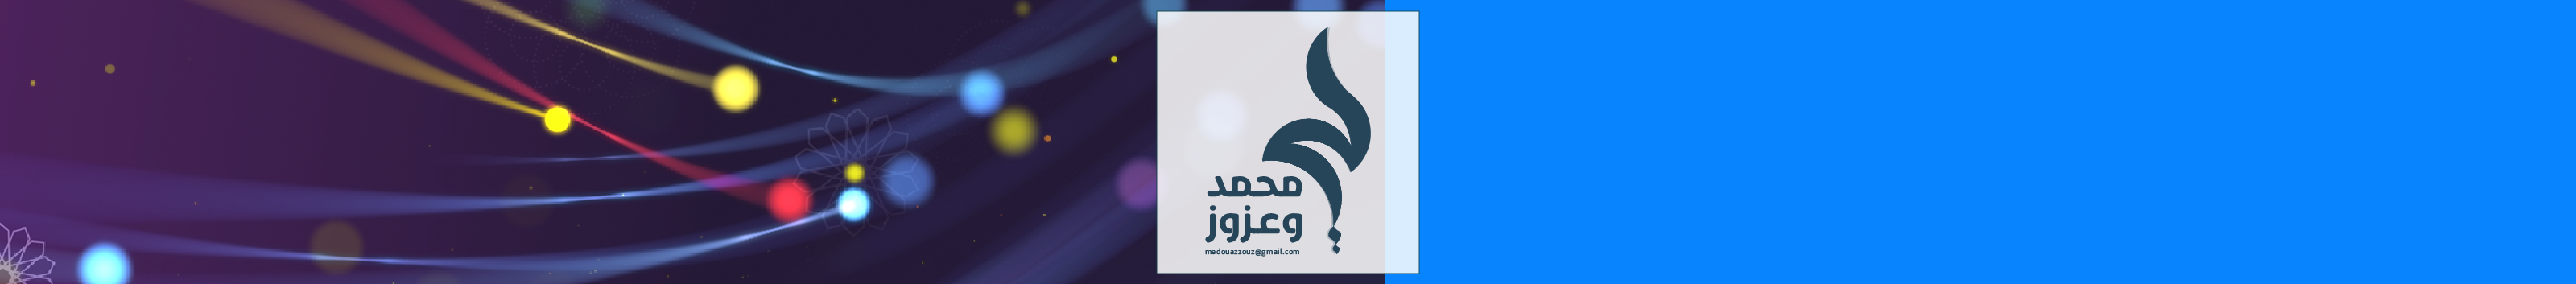 Profil-Banner von Mohamed Ouazzouz